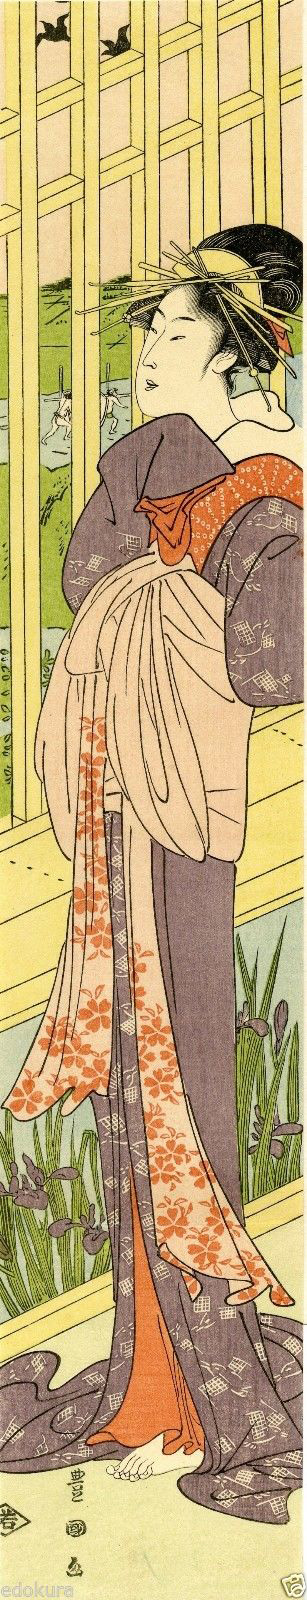 Standing Lady Hashira by Toyokuni I